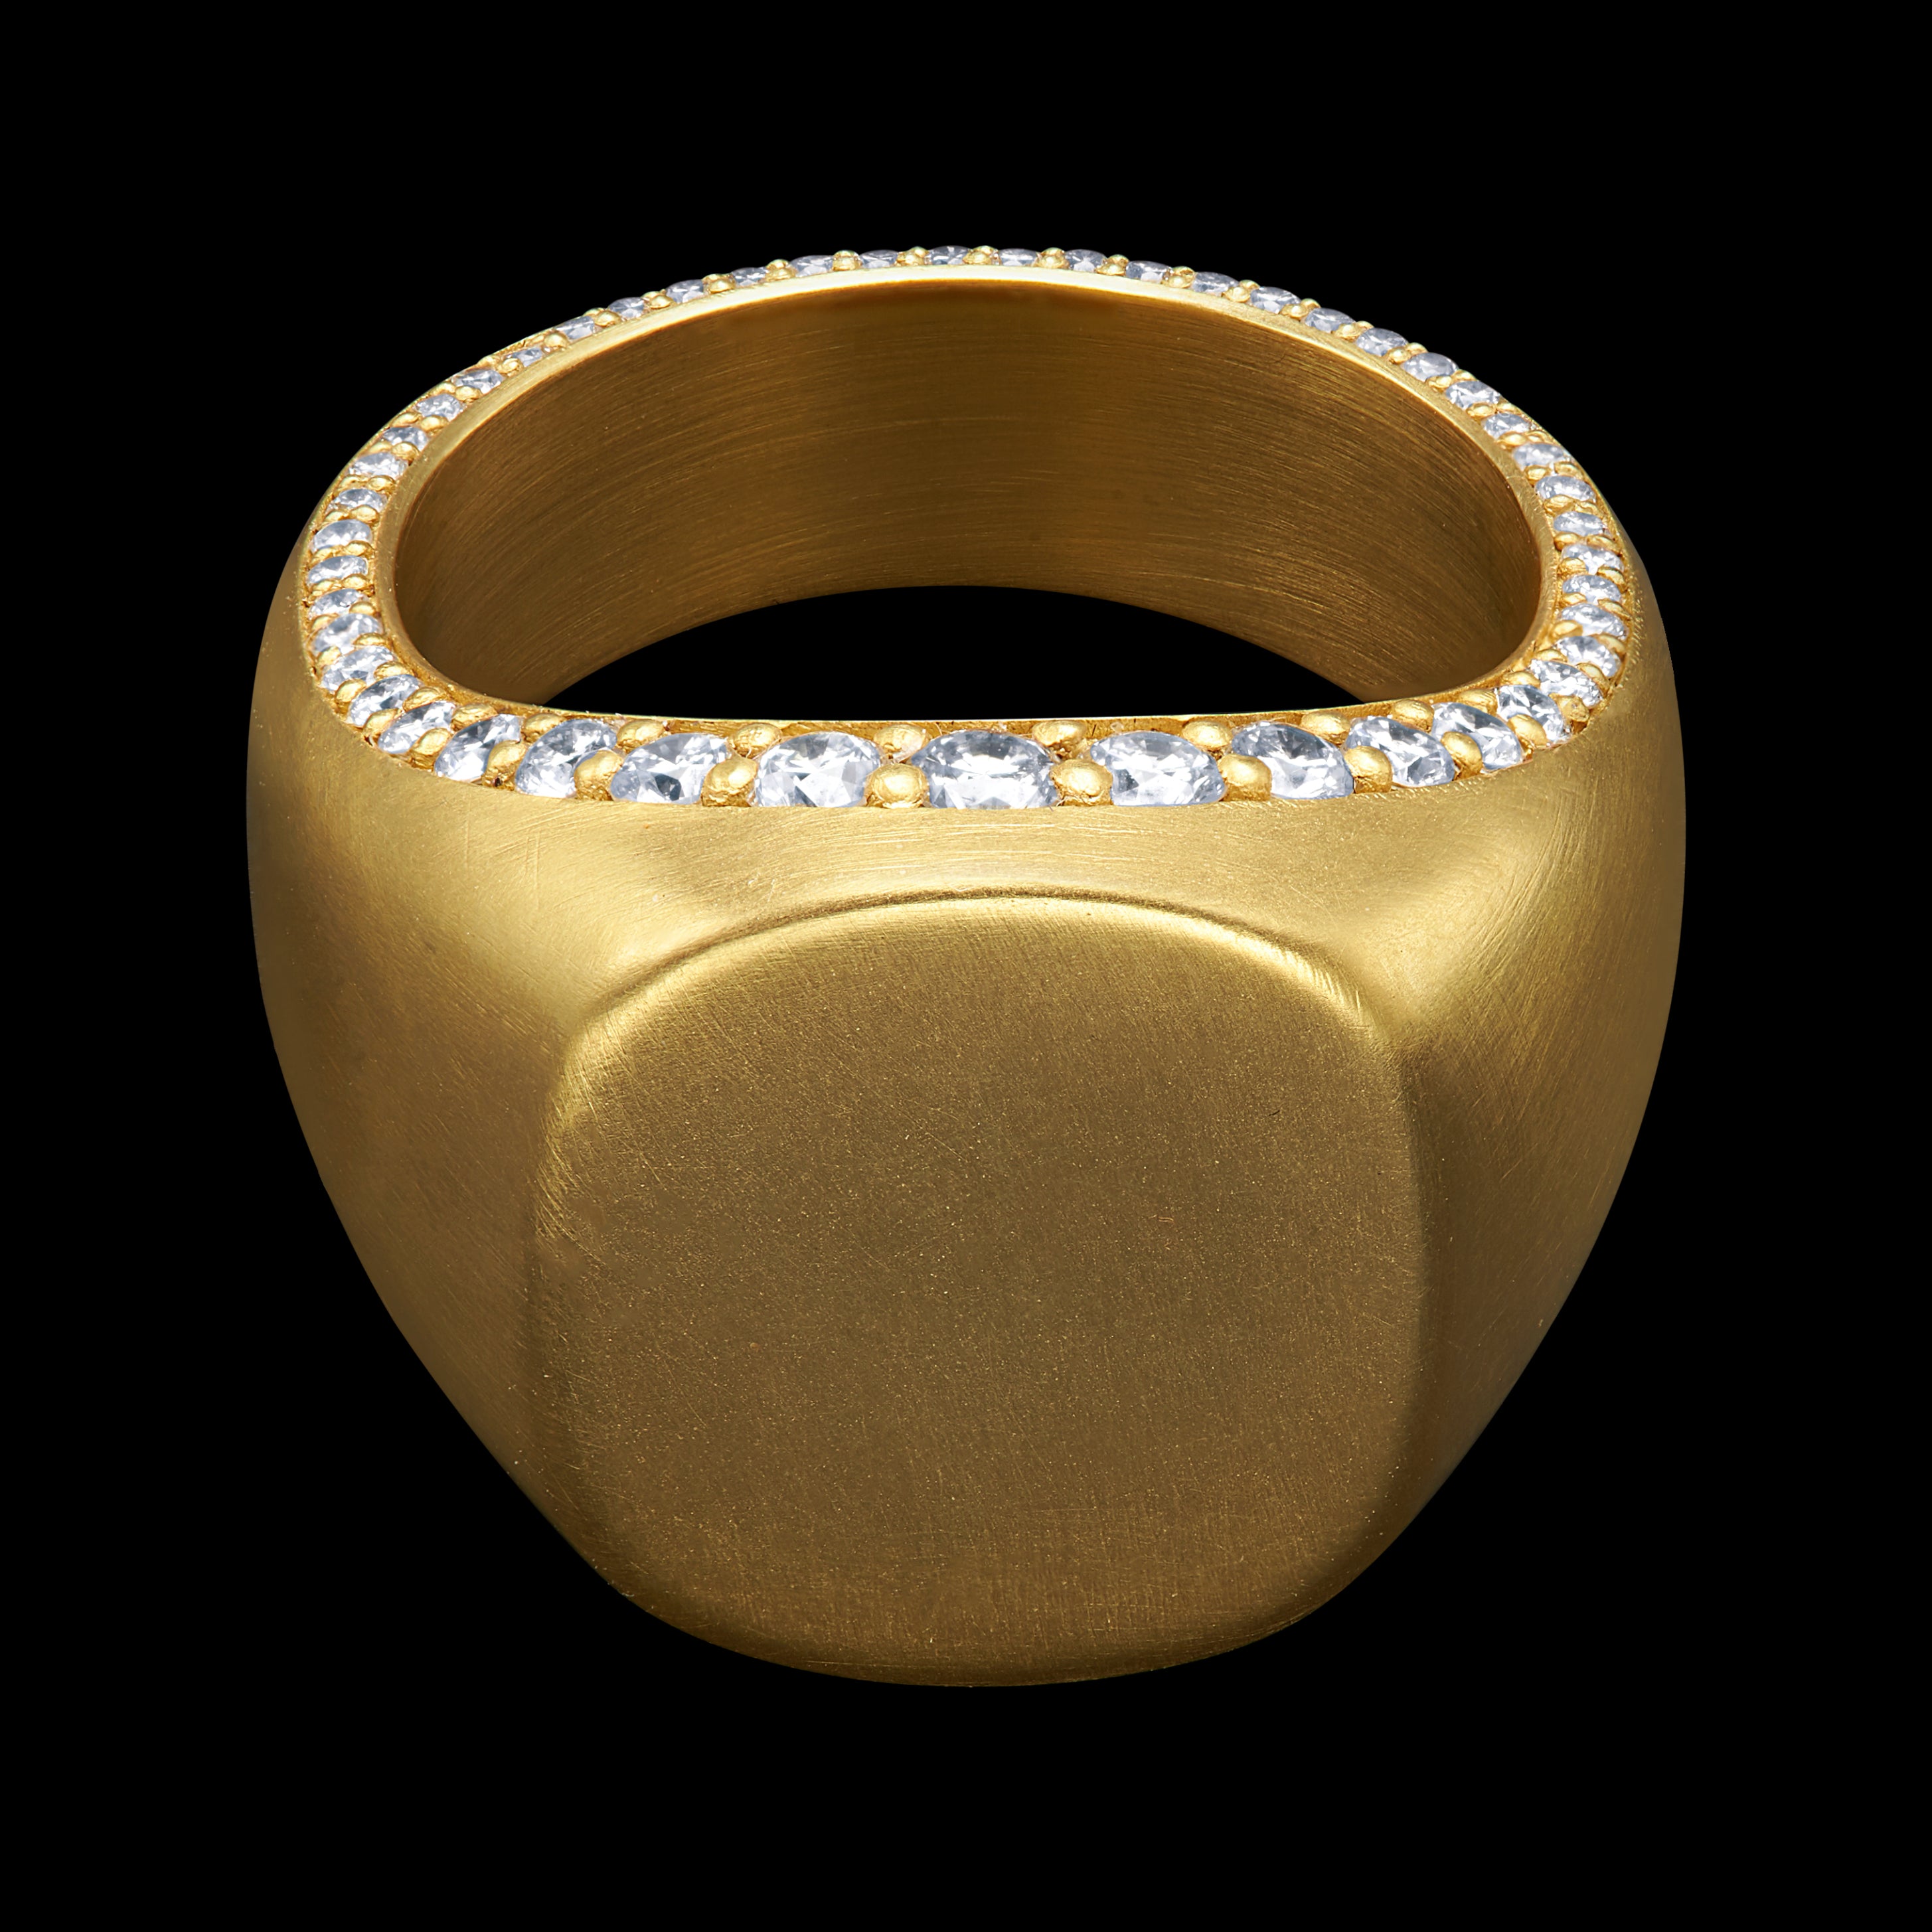 Shola Branson Diamond Edge Signet Ring 18k Gold with 1 carat of Diamonds